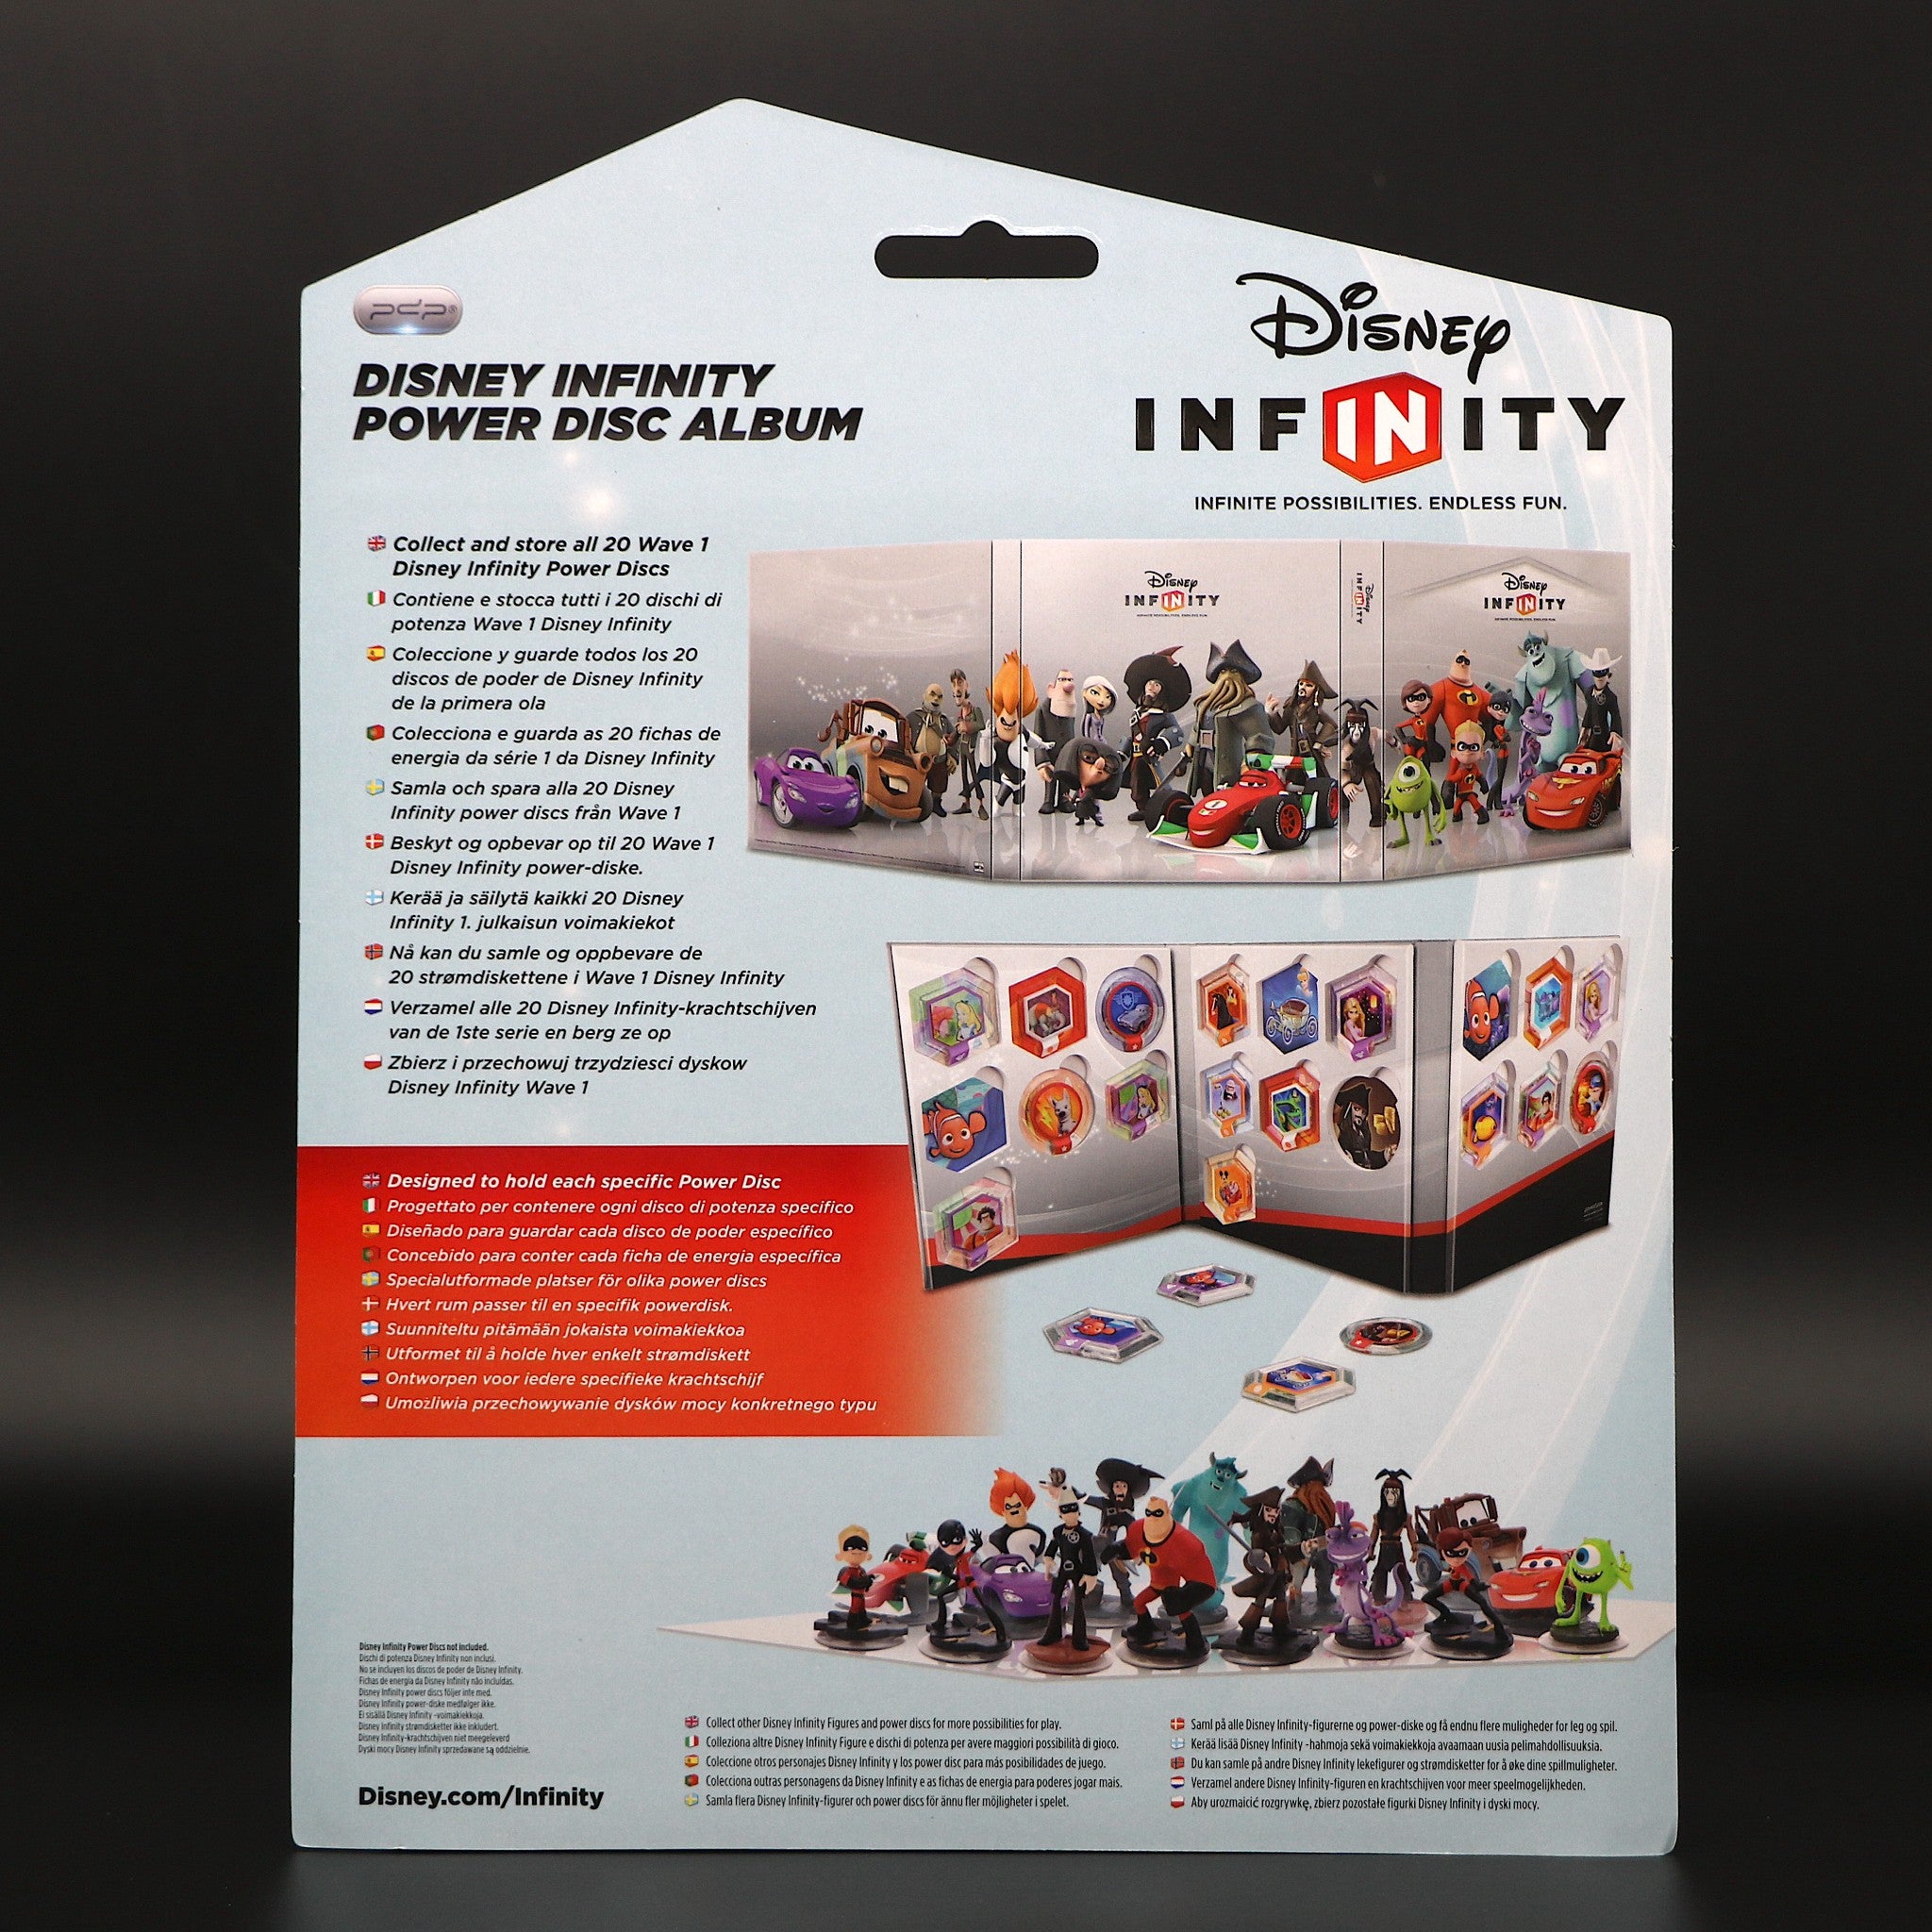 Disney Infinity Album Folder Holder for Power Up Discs Pods | Wave 1 | New